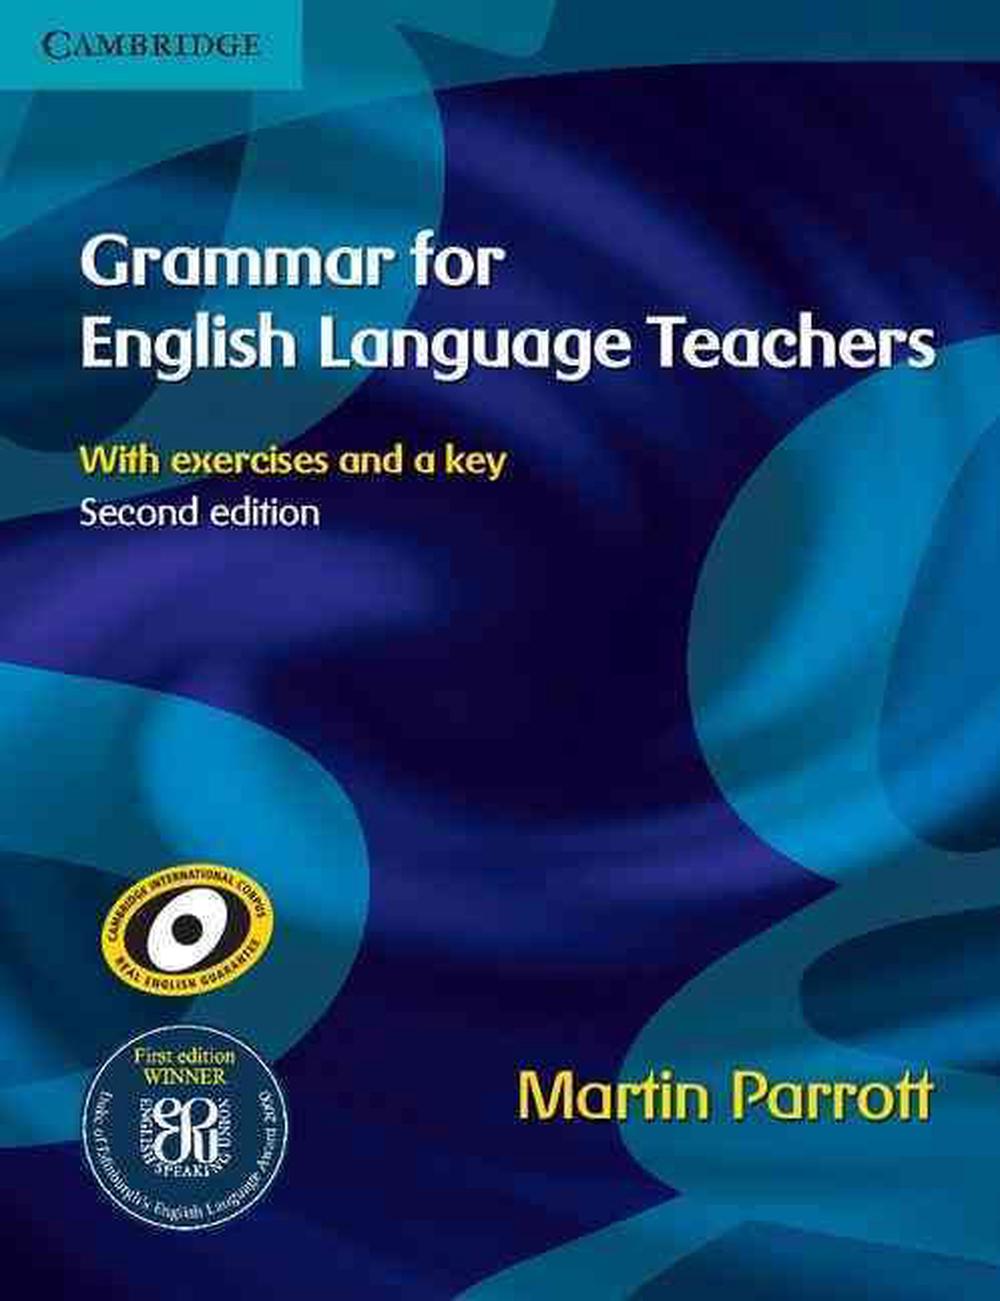 Grammar for English Language Teachers by Martin Parrott, Paperback, 9780521712040 Buy online